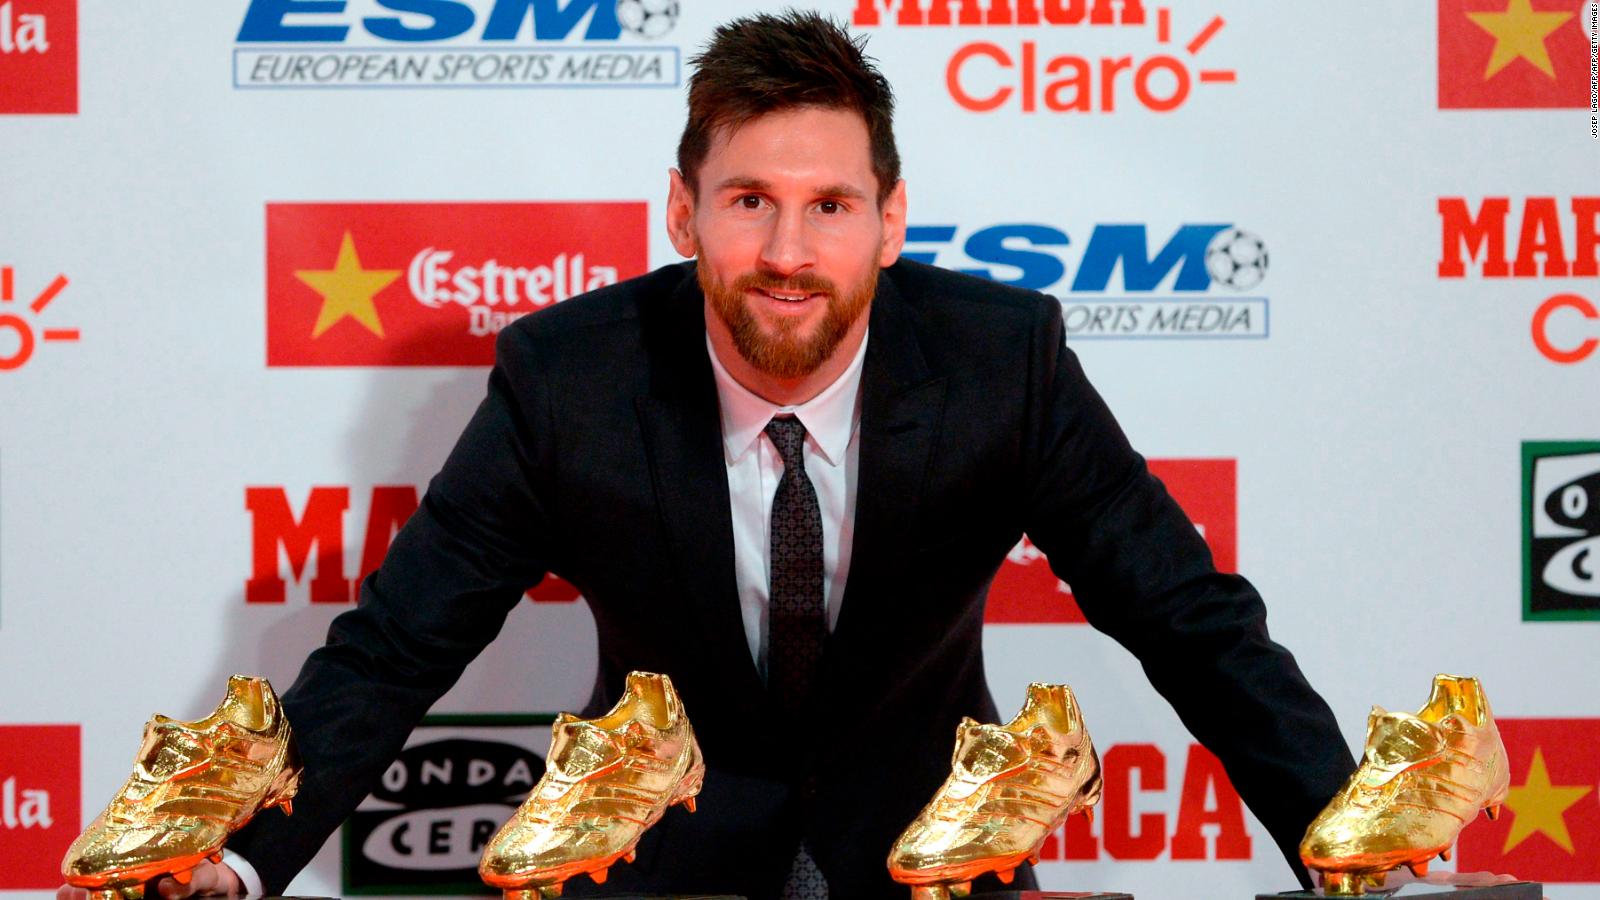 Cuarta bota de oro de Lionel Messi: iguala a Cristiano Ronaldo goleador en Europa | Video | CNN